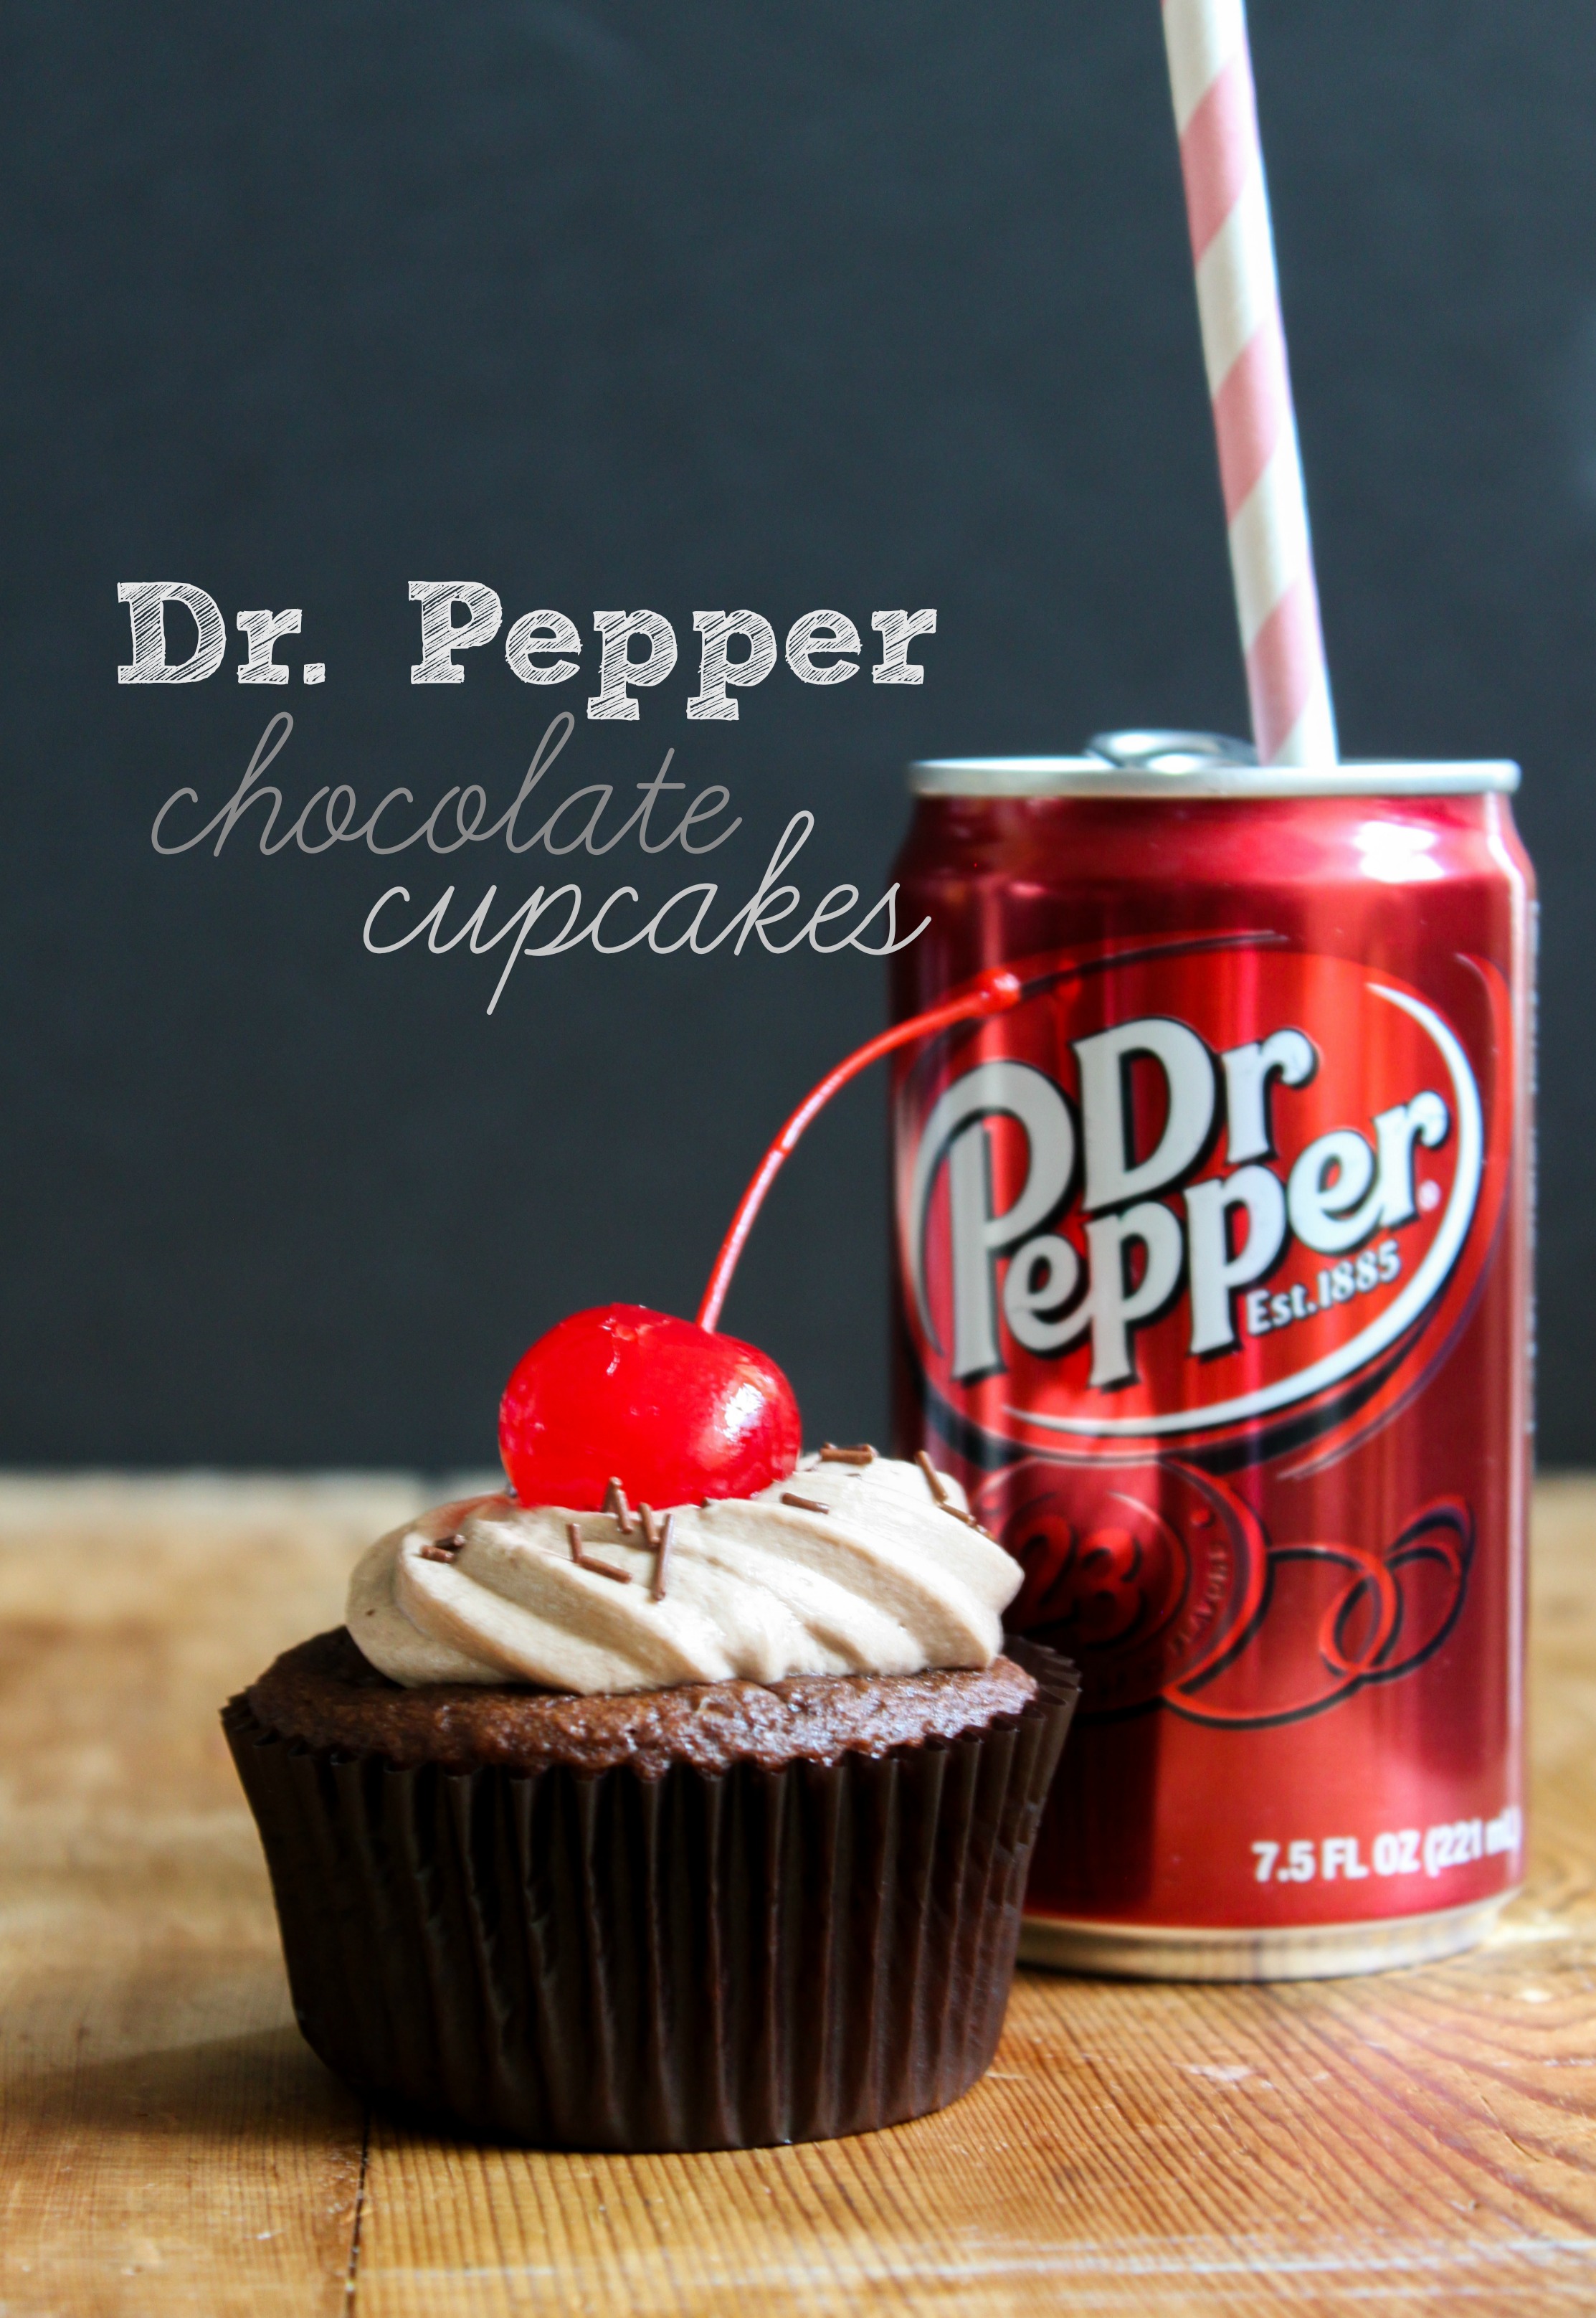 Dr Pepper Image Thecelebritypix